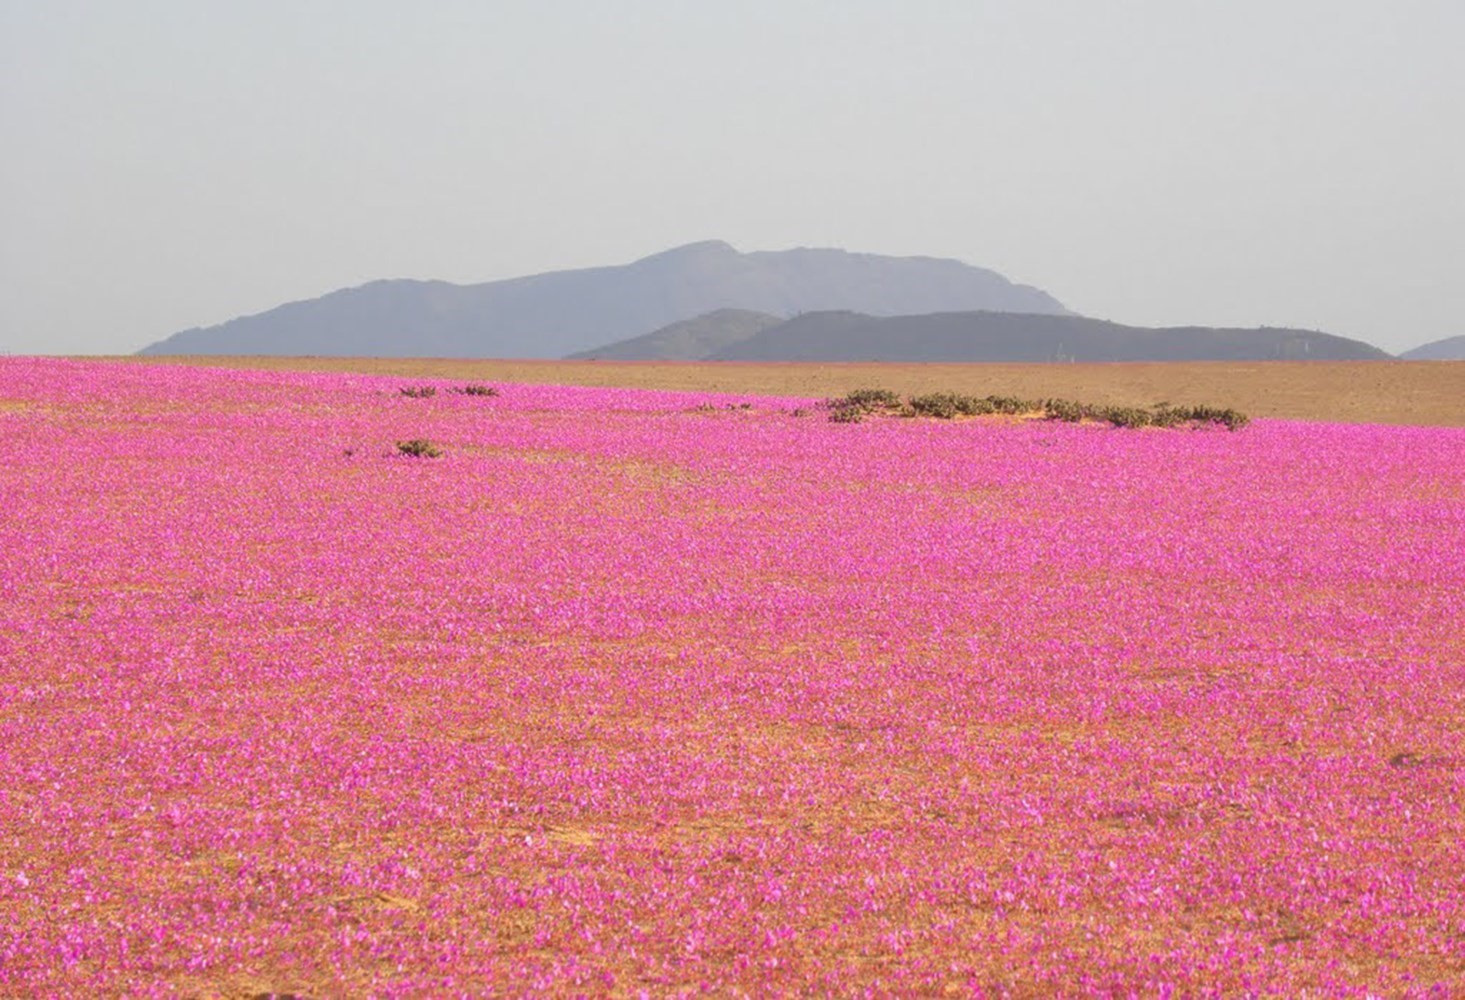 How the Atacama Desert Has Been Painted Pink with Flowers